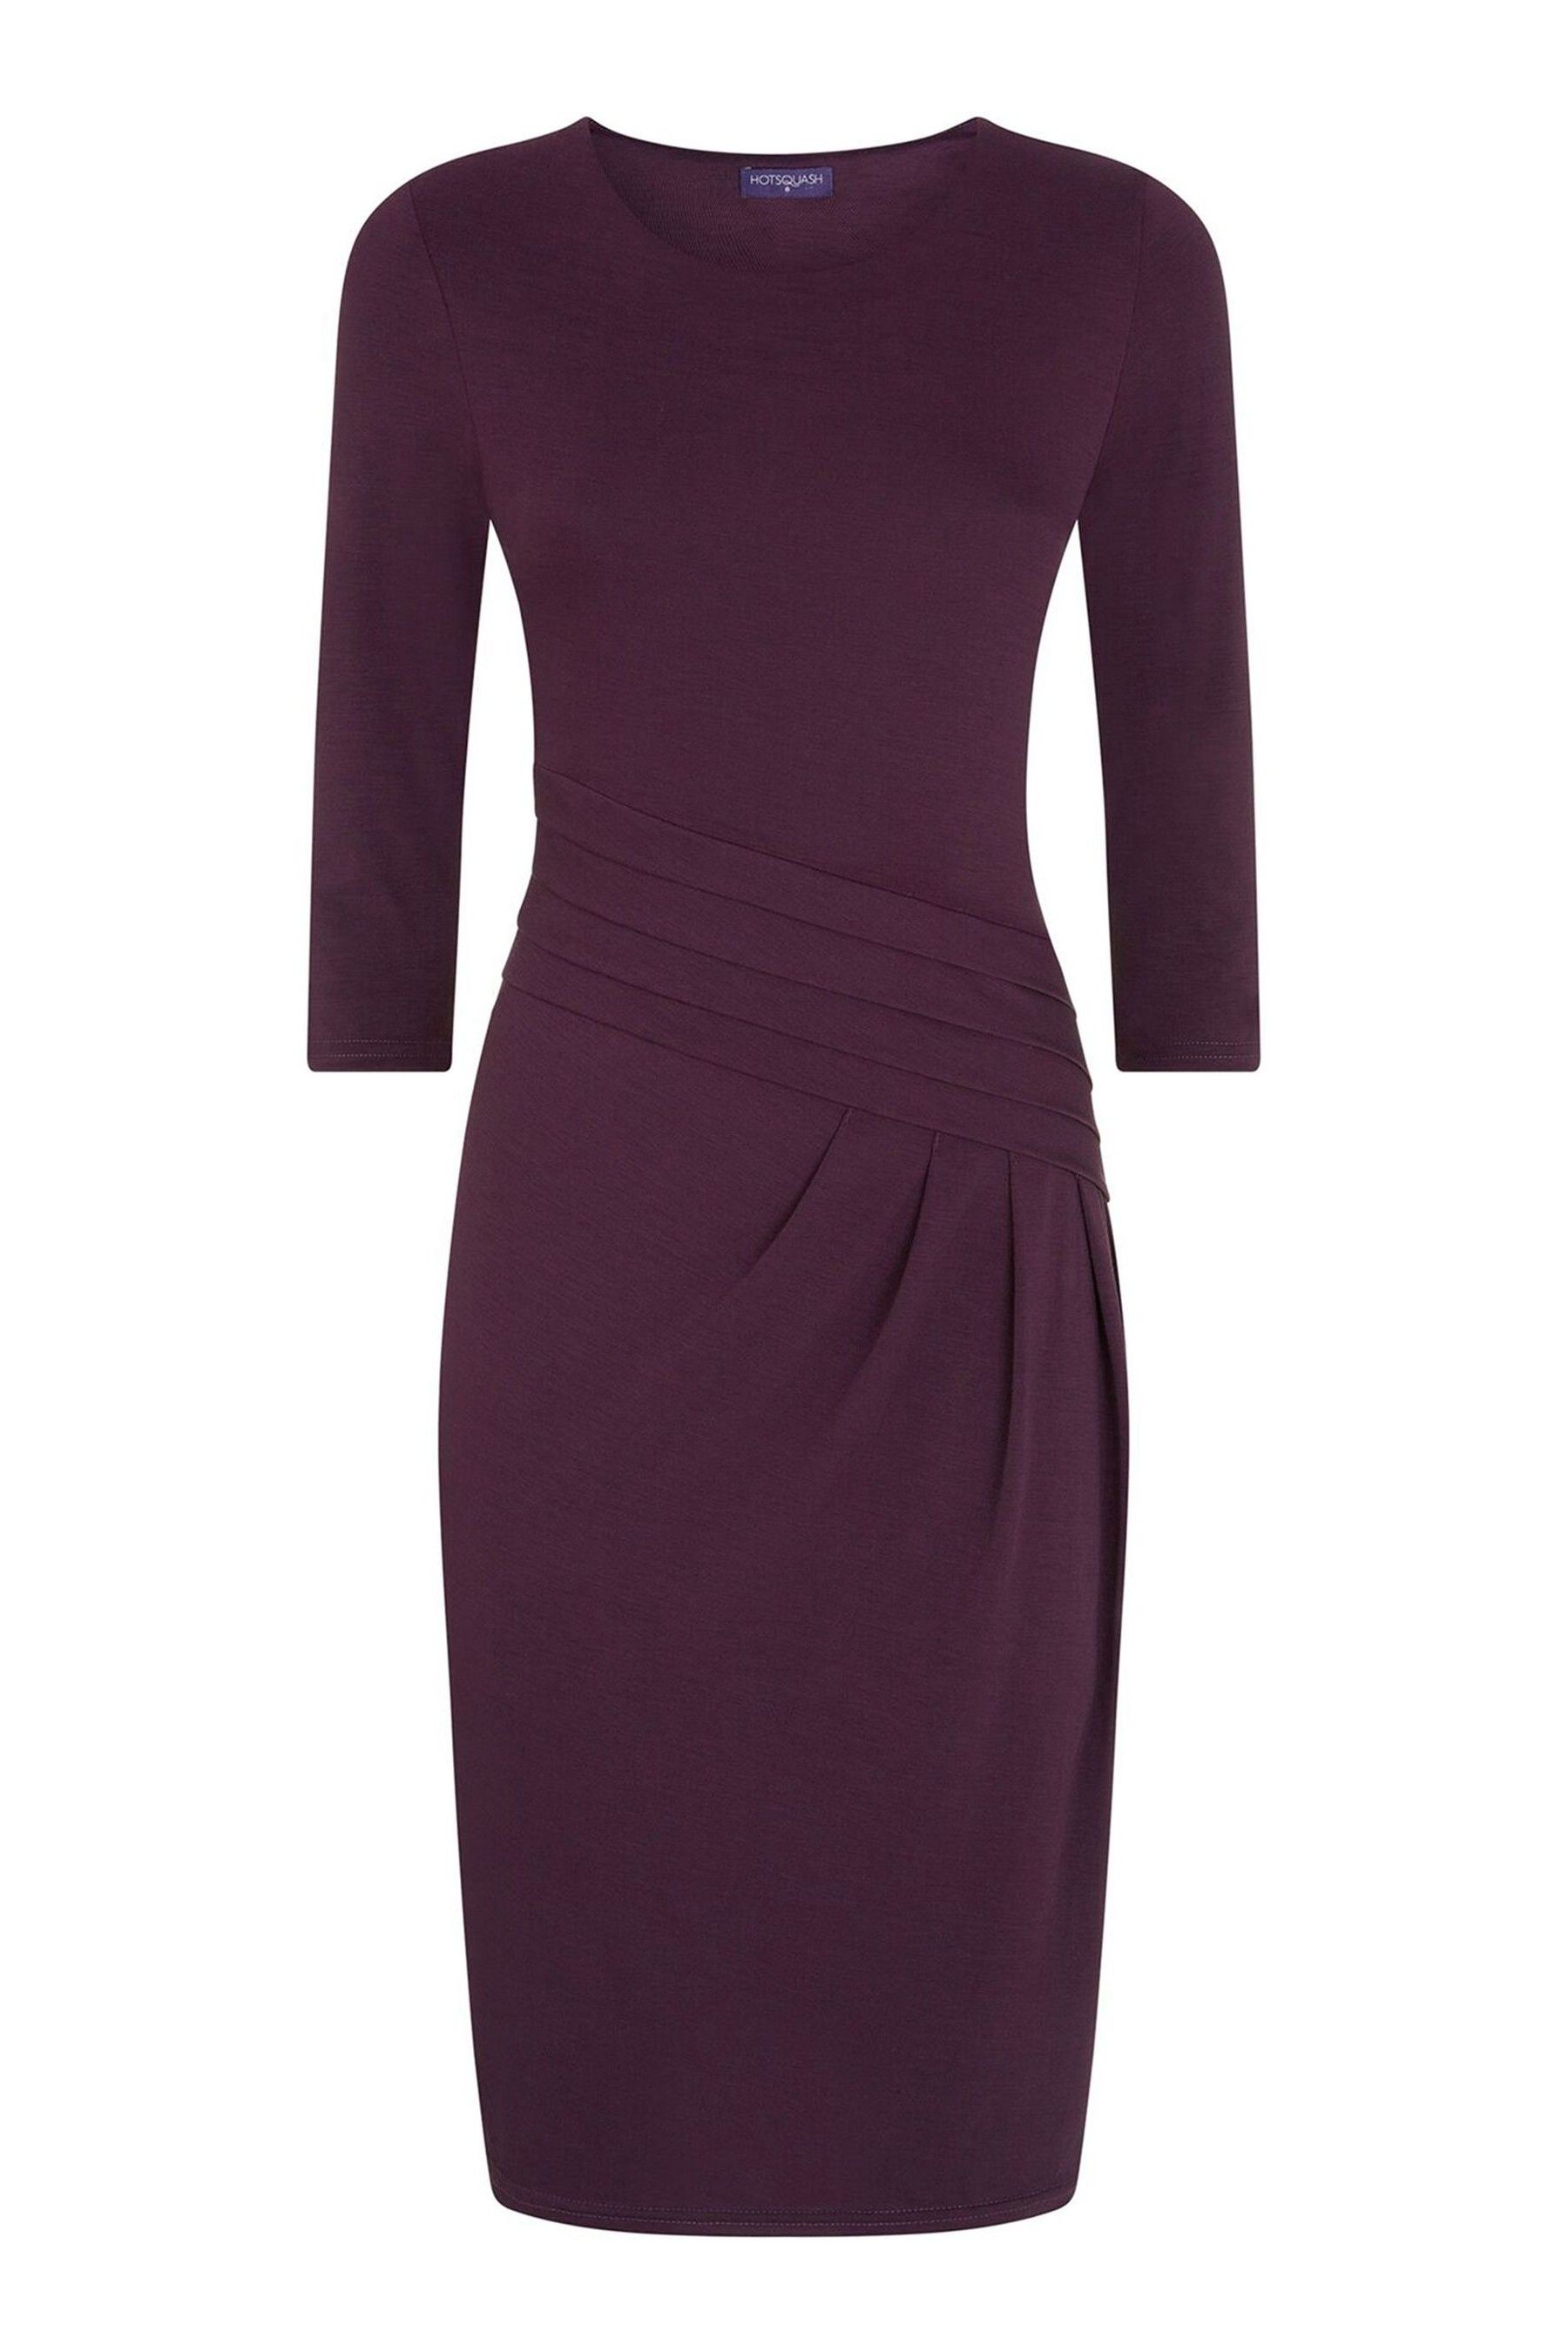 Buy Hotsquash Purple Damson Pleat Waist Dress from the Next UK online shop